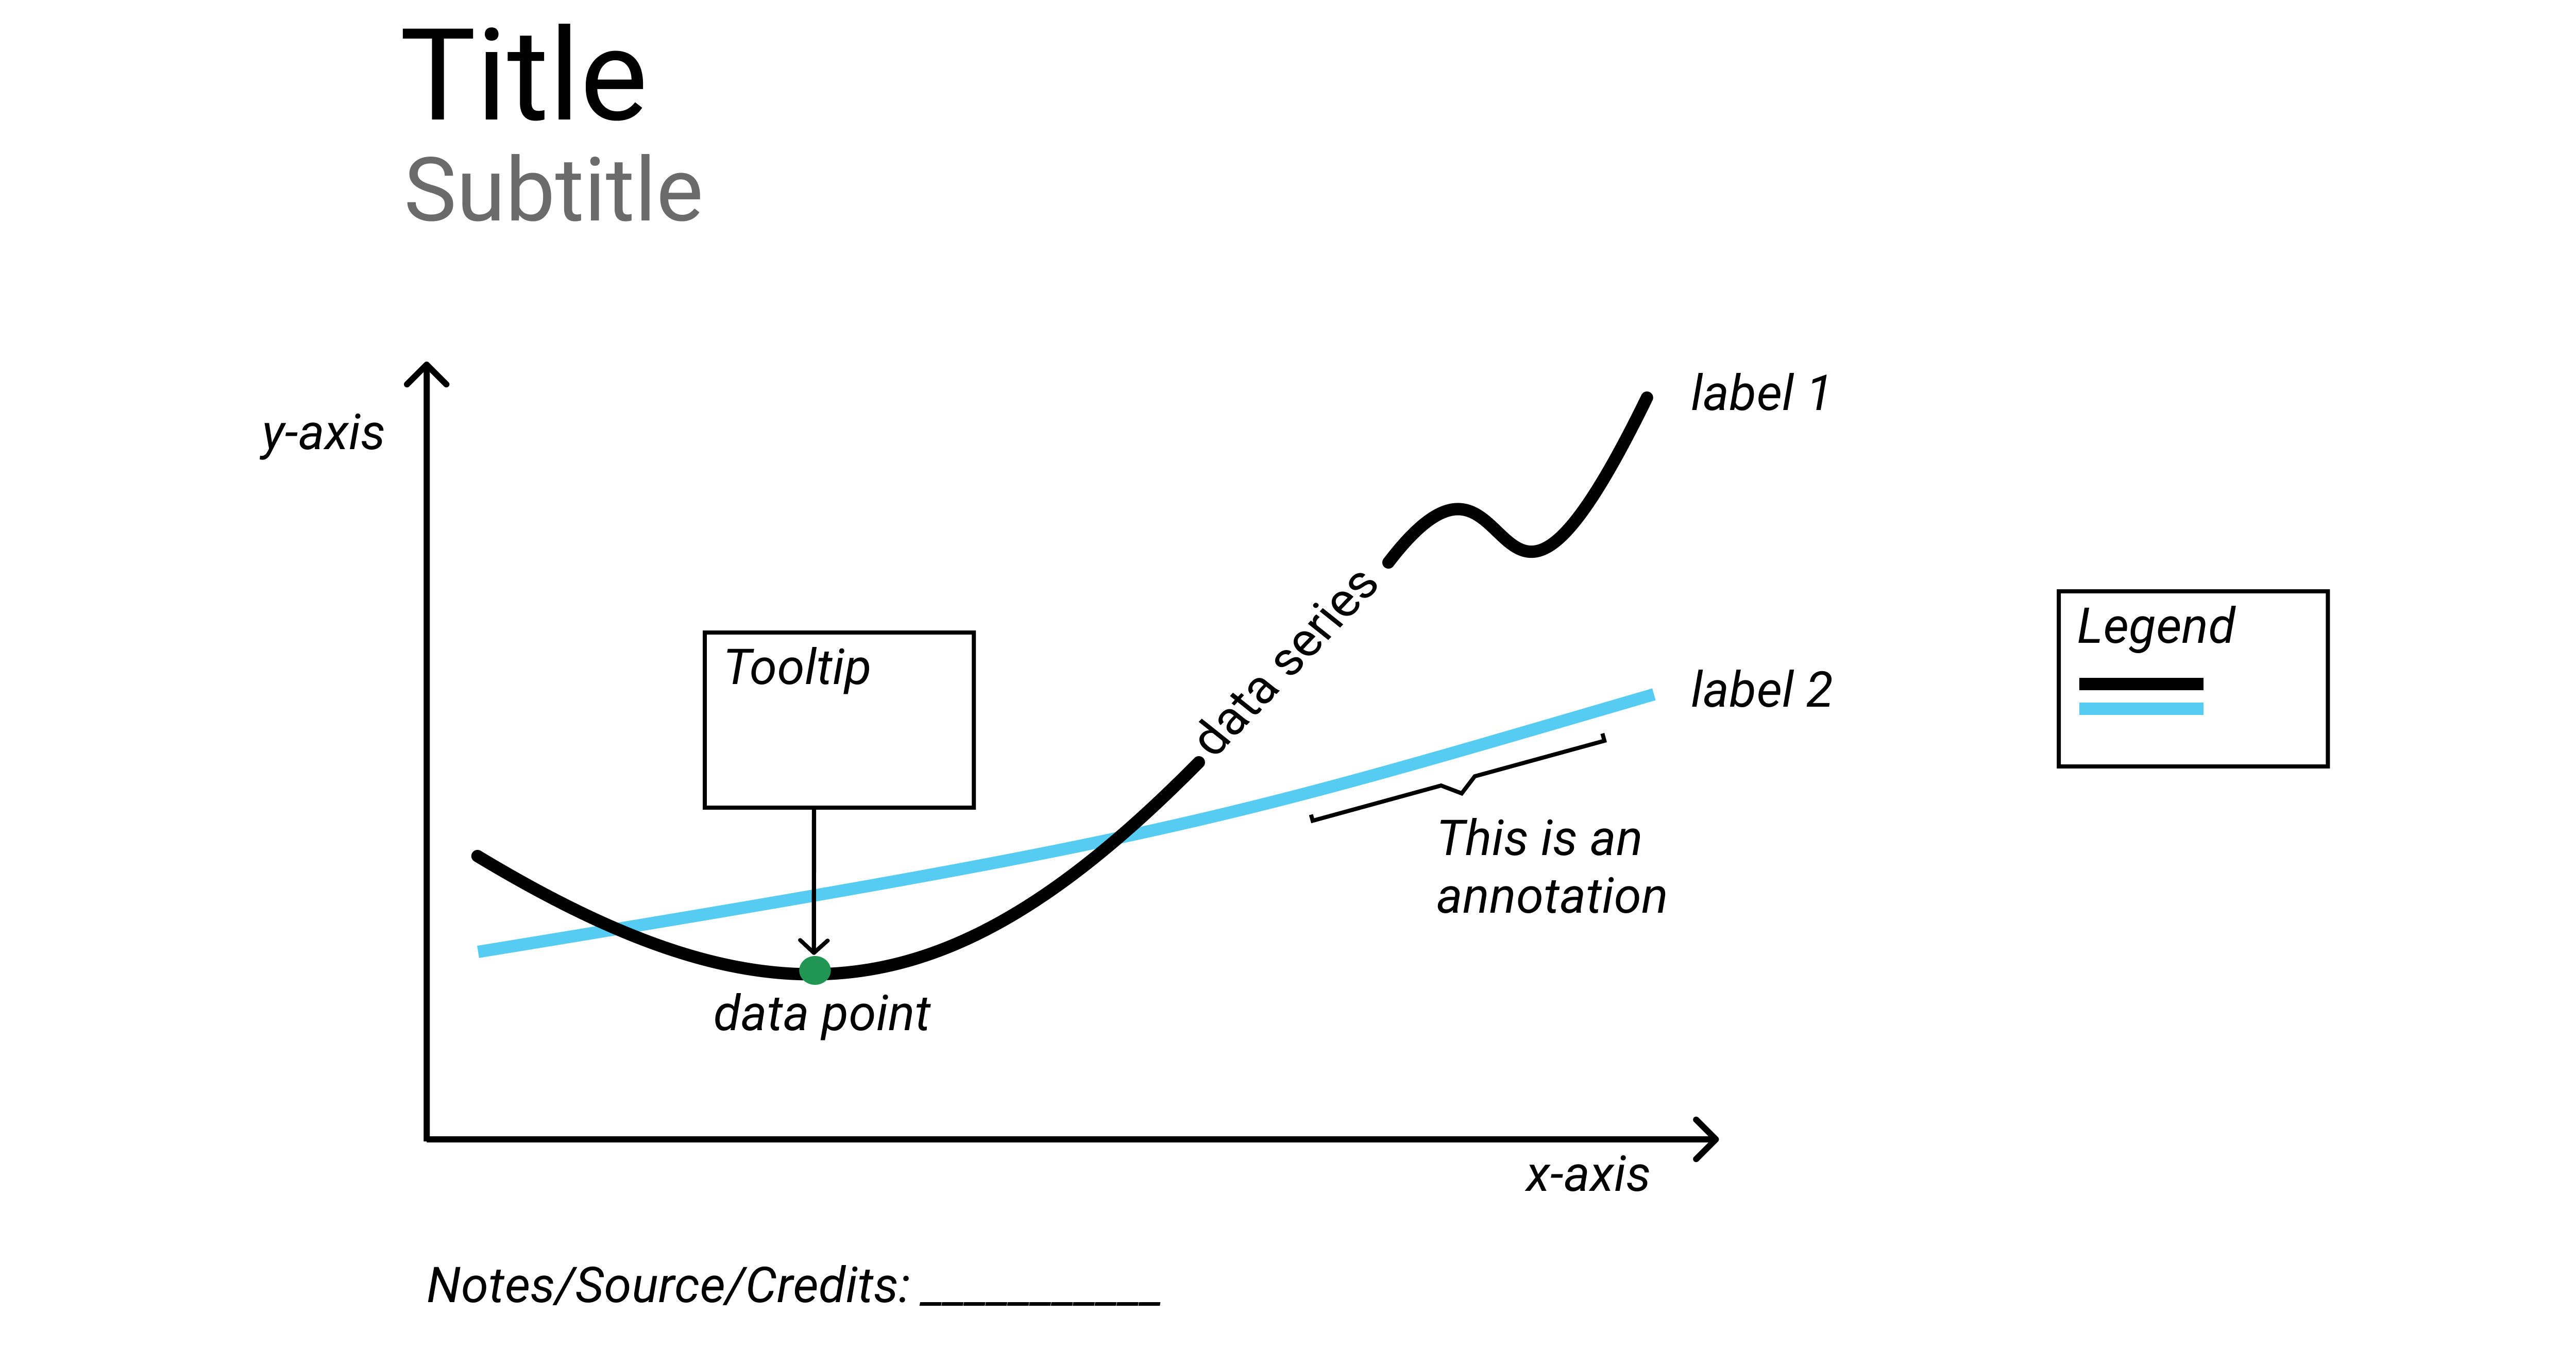 Zeilendiagramm Vektor PNG kostenloses Bild